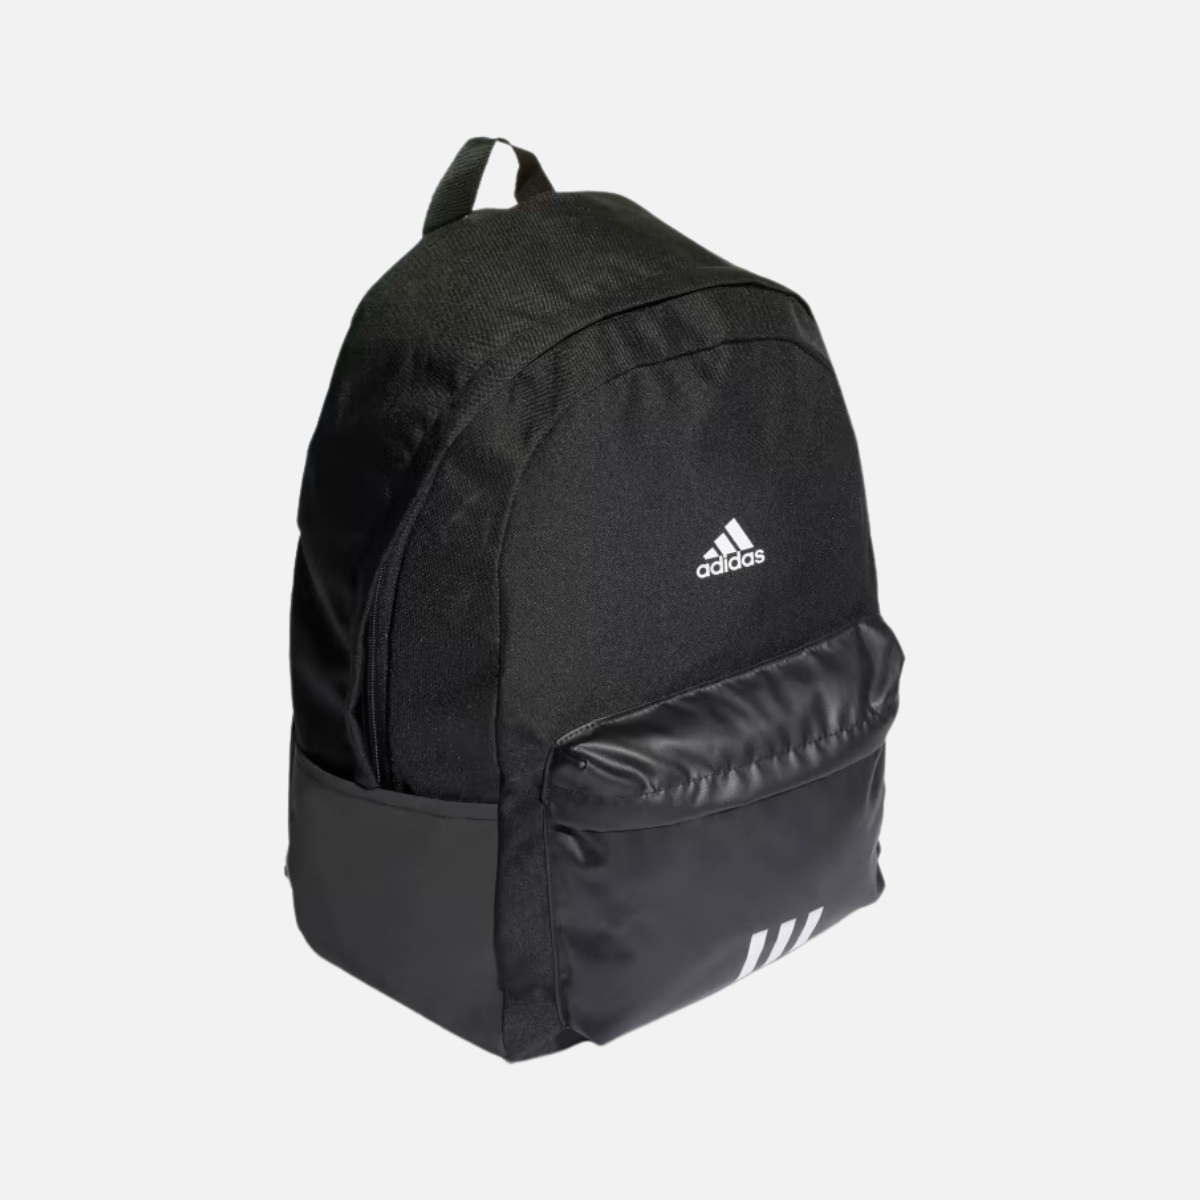 Adidas Classic Badge 3 Stripes Training Backpack -Black/White